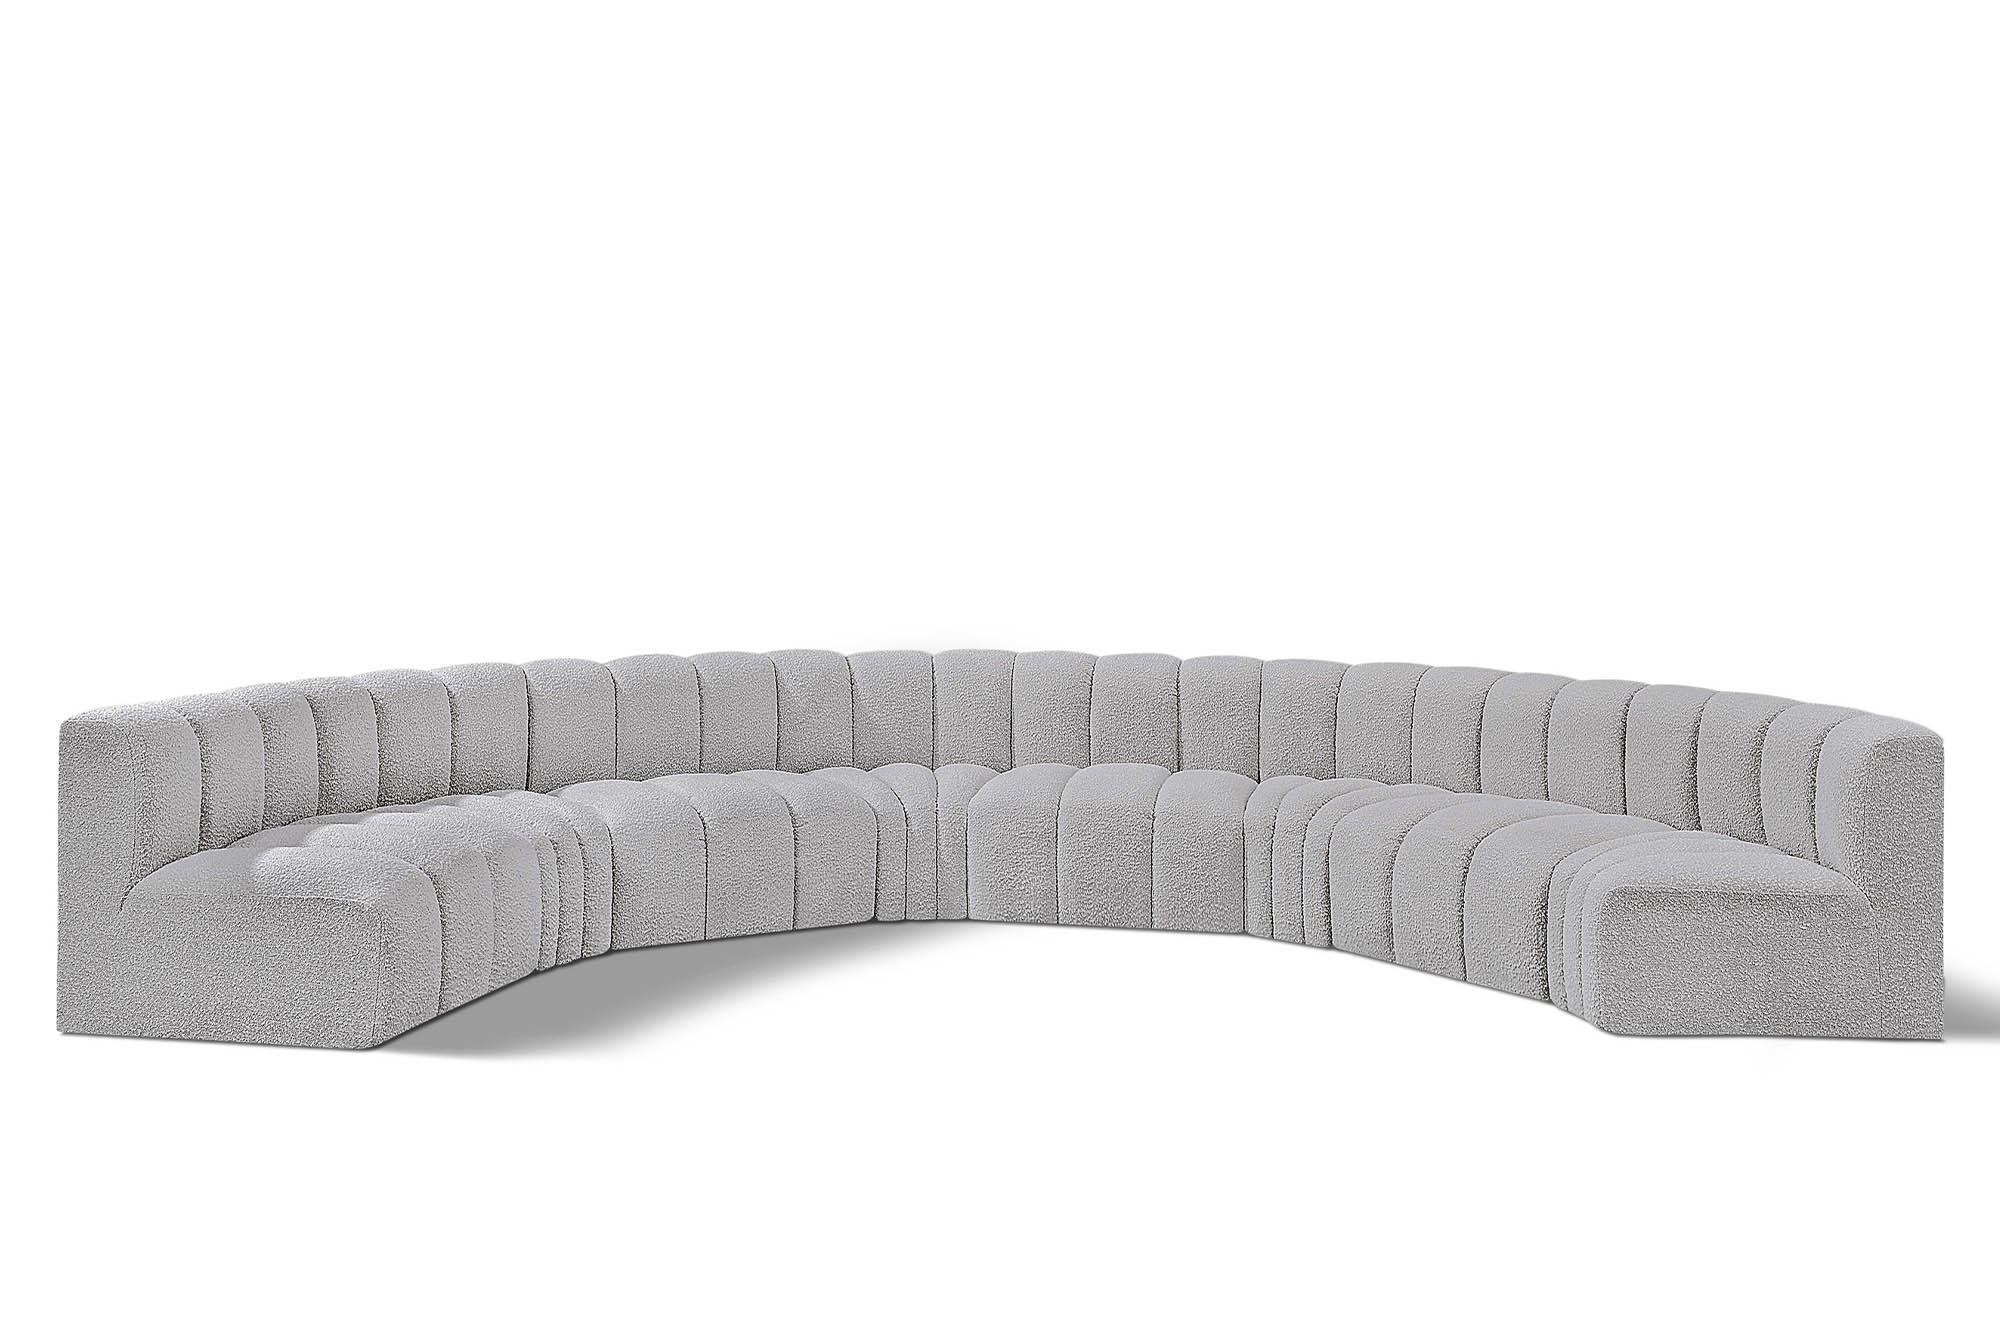 Contemporary, Modern Modular Sectional Sofa ARC 102Grey-S8B 102Grey-S8B in Gray 